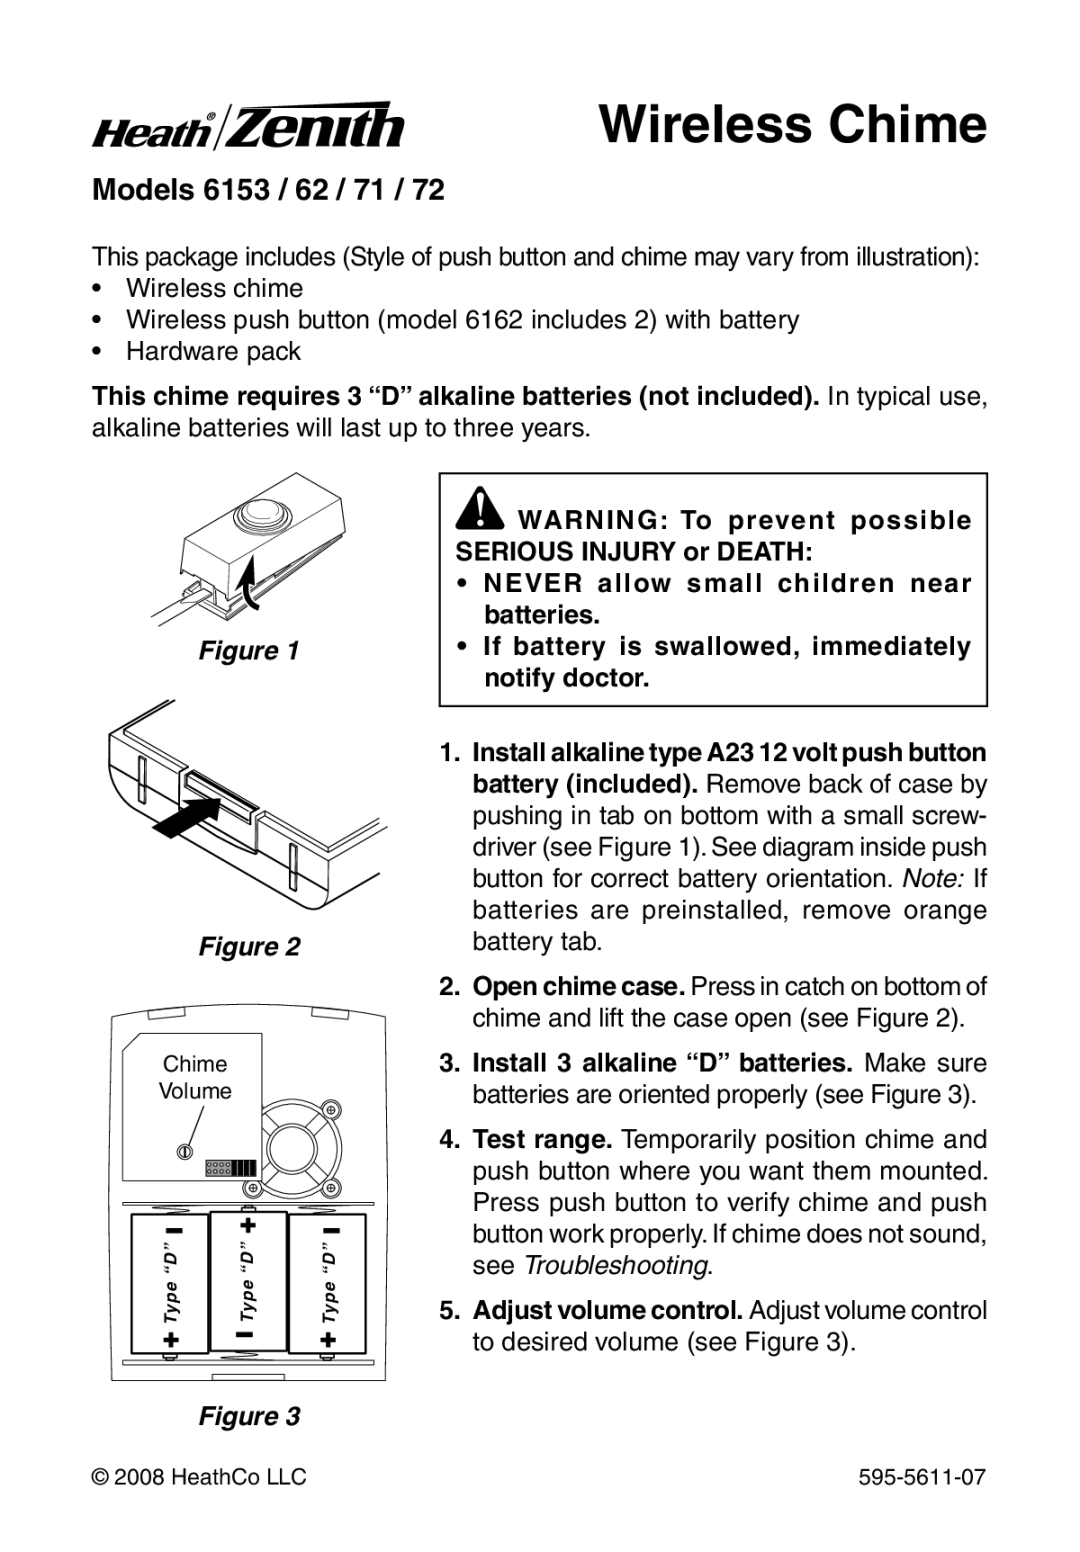 Heath Zenith 6153/62/71/72 manual Wireless Chime, Models 6153 / 62 / 71, NEVER allow small children near batteries 